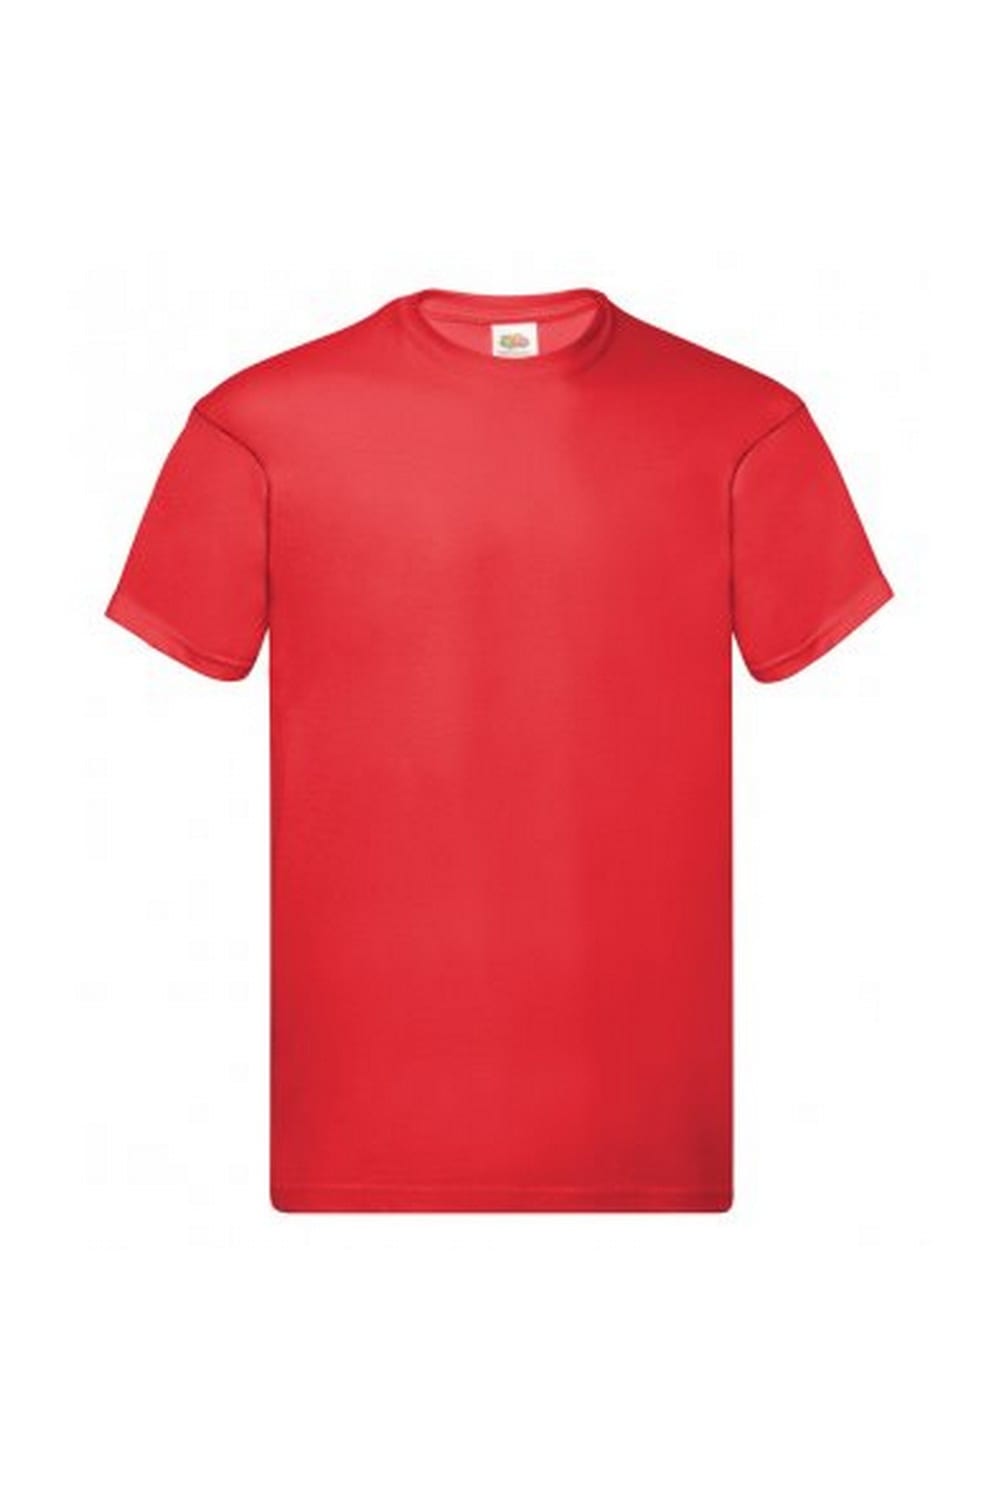 Fruit Of The Loom Mens Original Short Sleeve T-Shirt (Red)